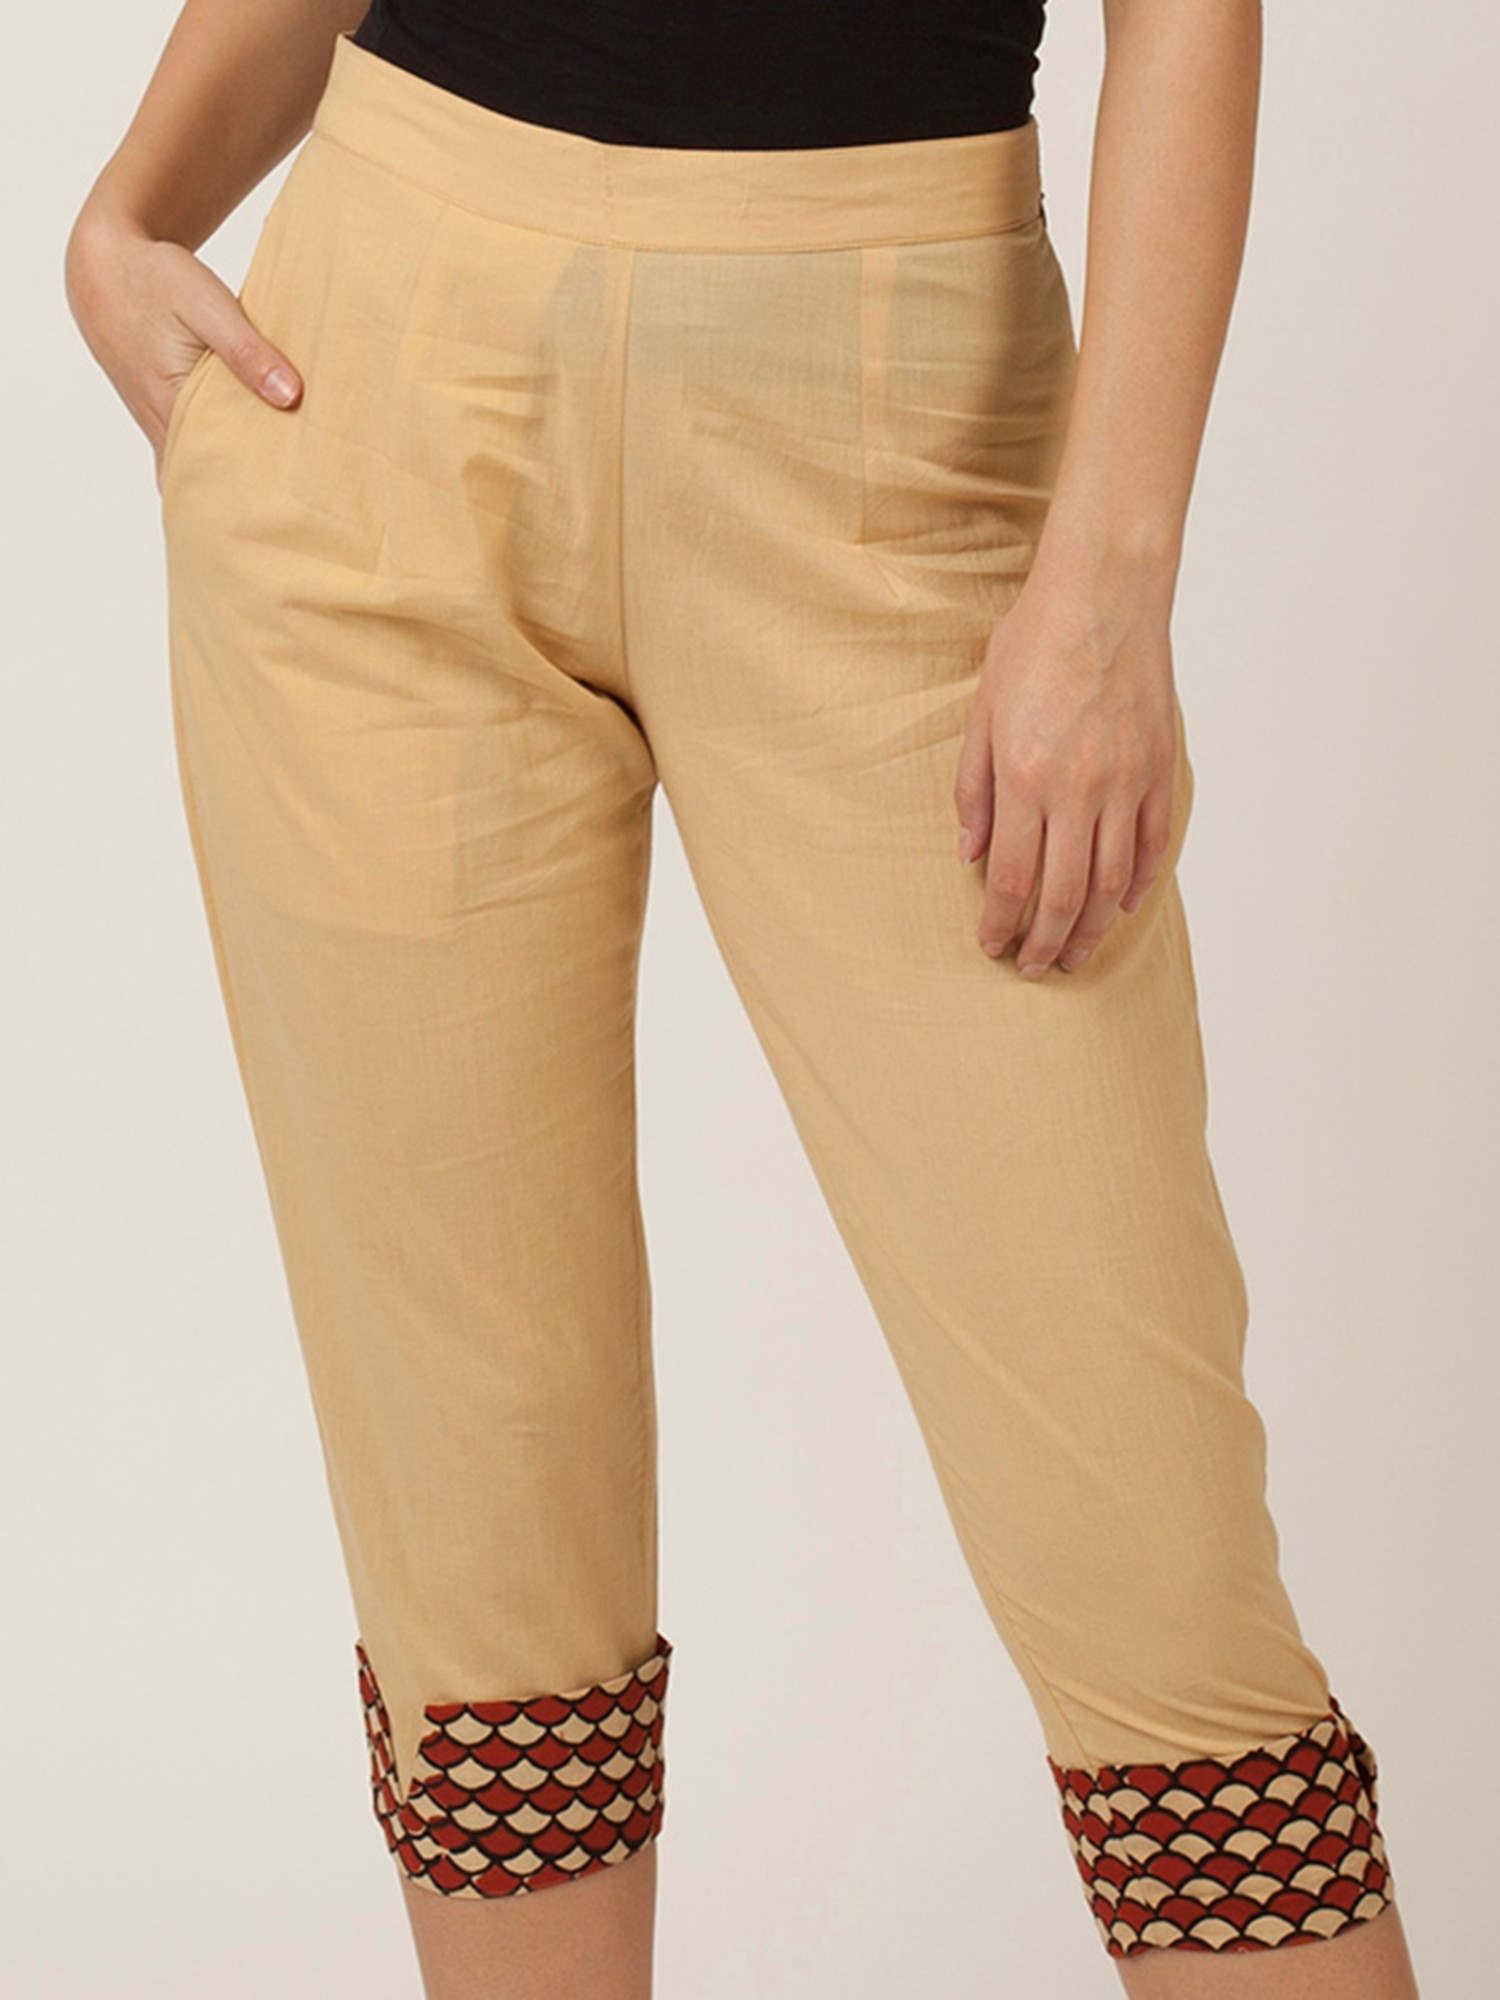 winter 2020 trouser | Womens pants design, Fashion pants, Stylish pants